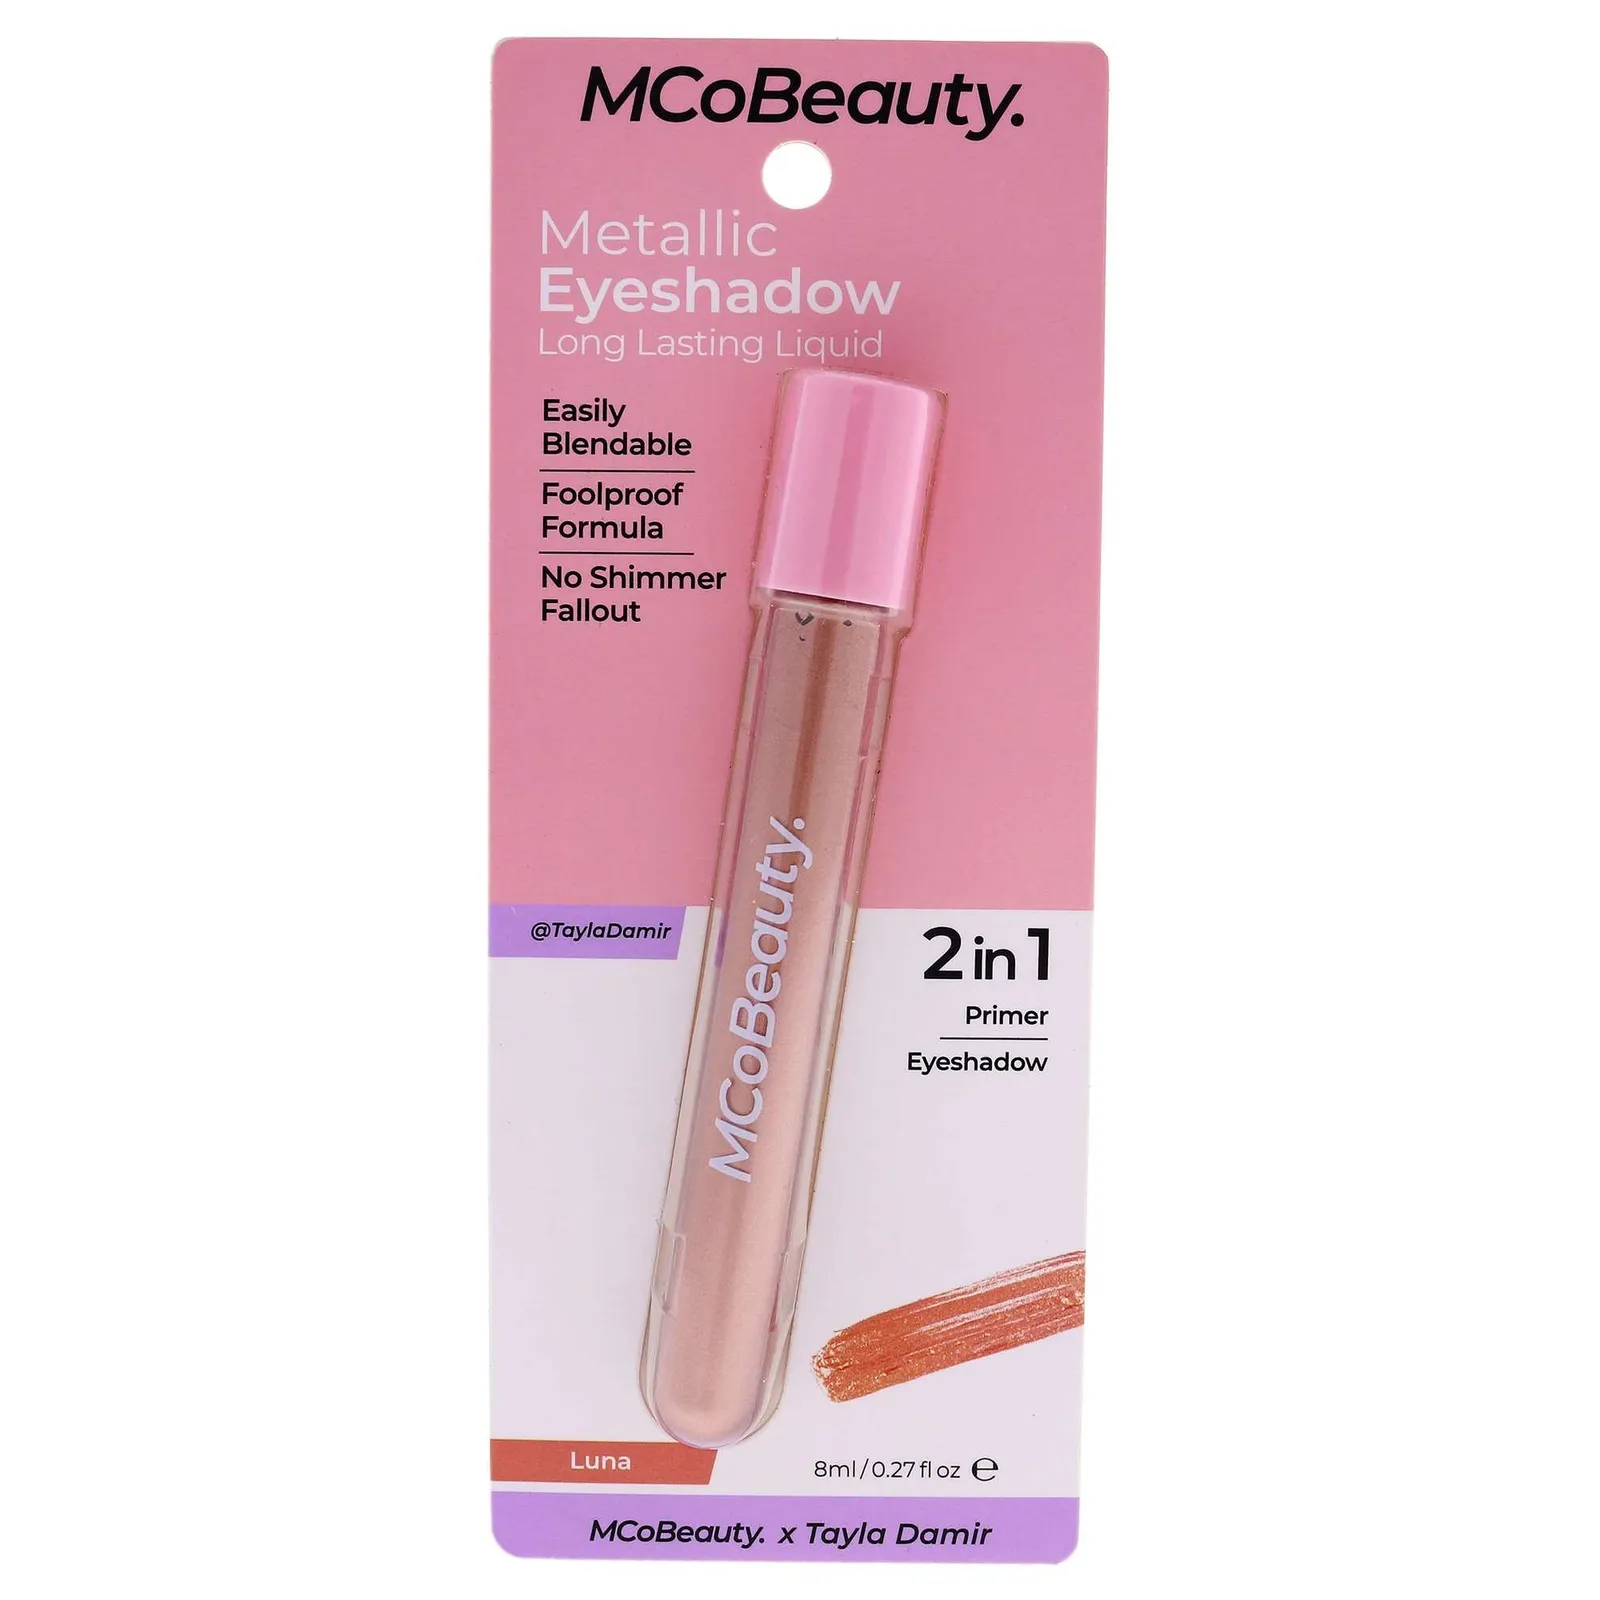 Metallic Eyeshadow Long Lasting Liquid - Luna by MCoBeauty for Women - 0... - $21.00